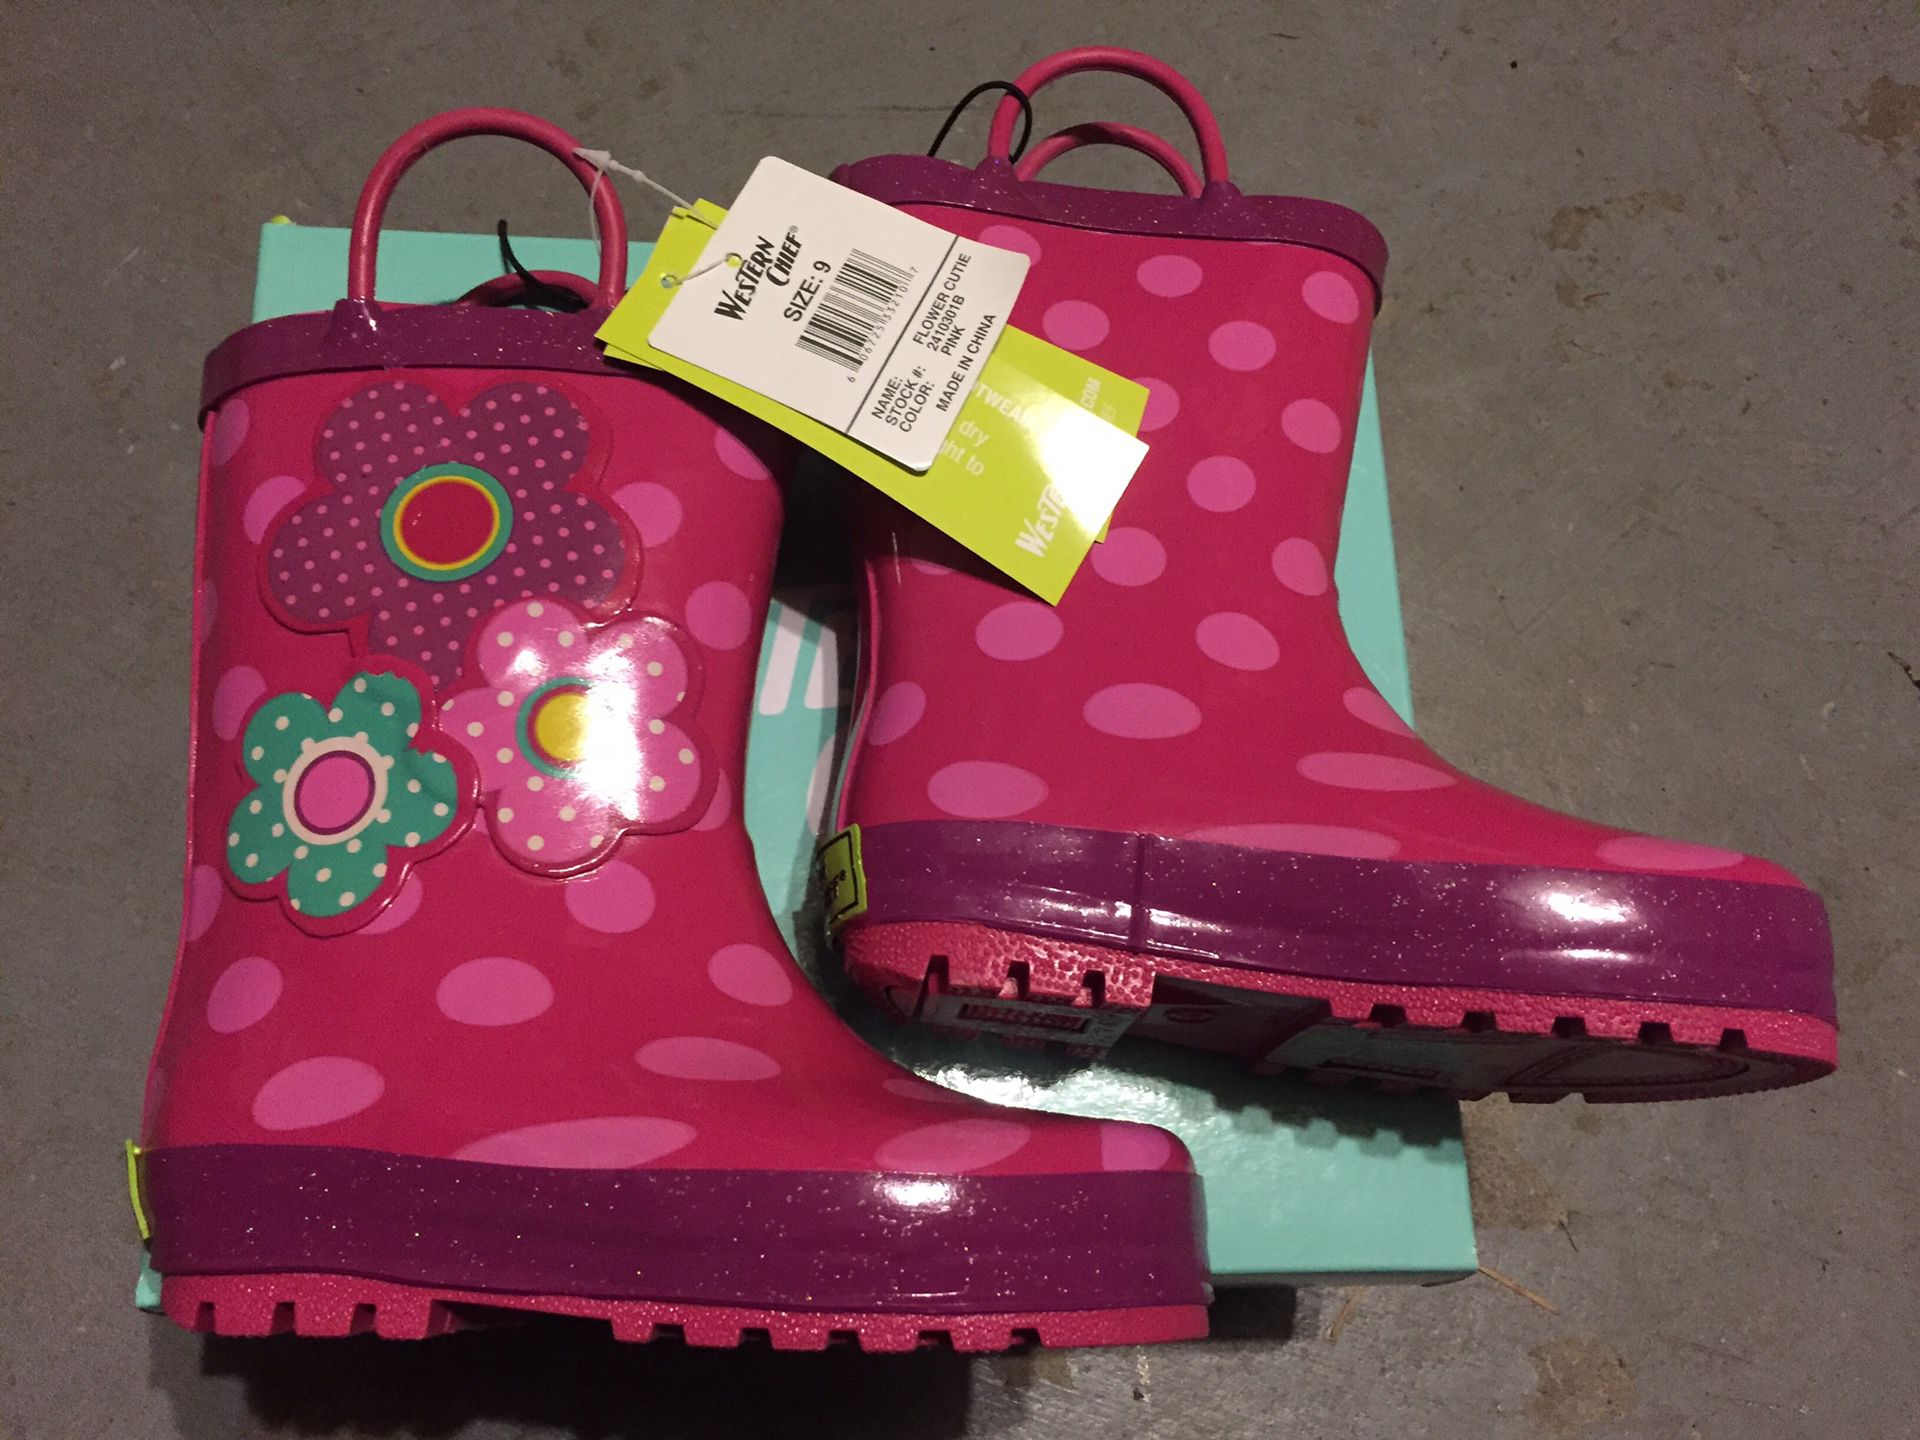 NEW! Toddler Girls Size 9 Rain Boots